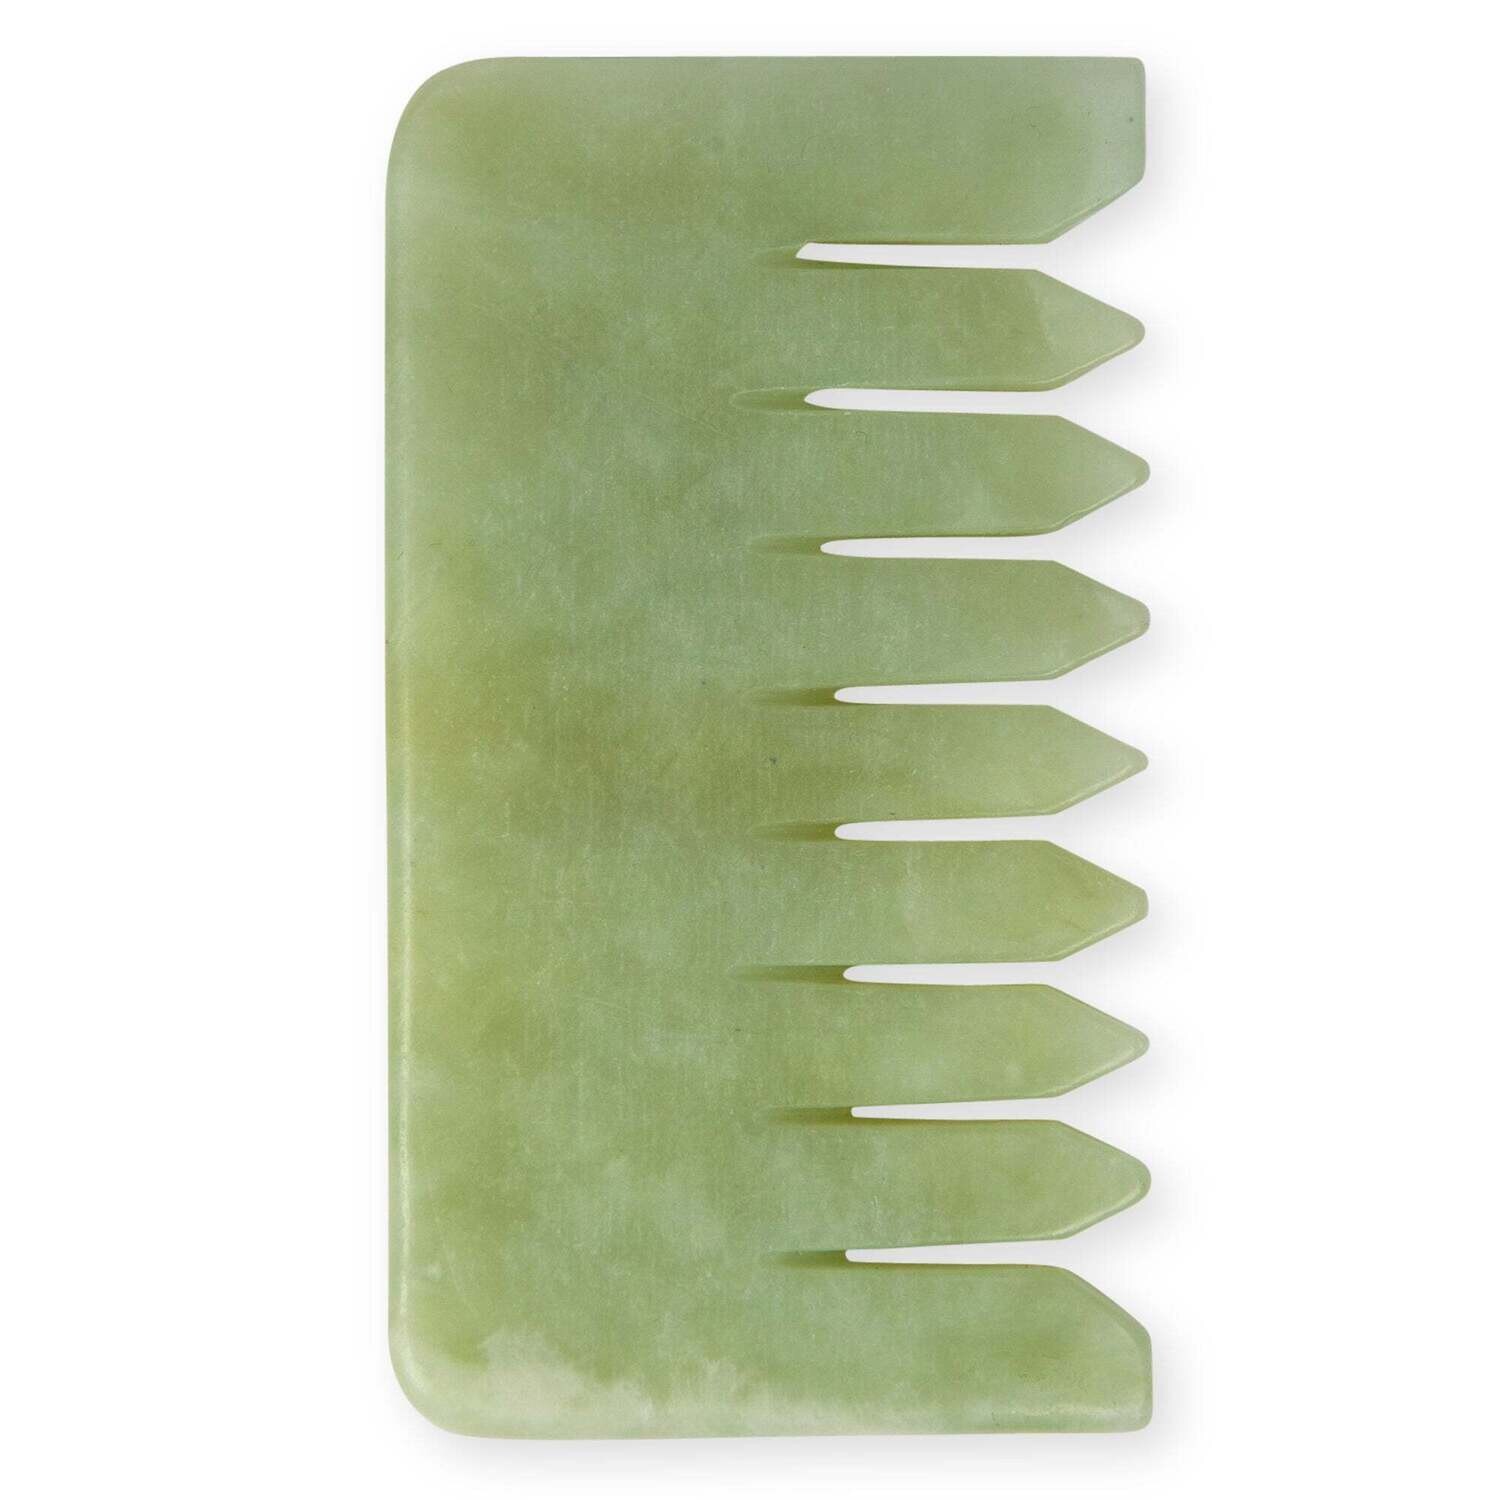 Jade Body Comb & Jade Scalp Comb all in one